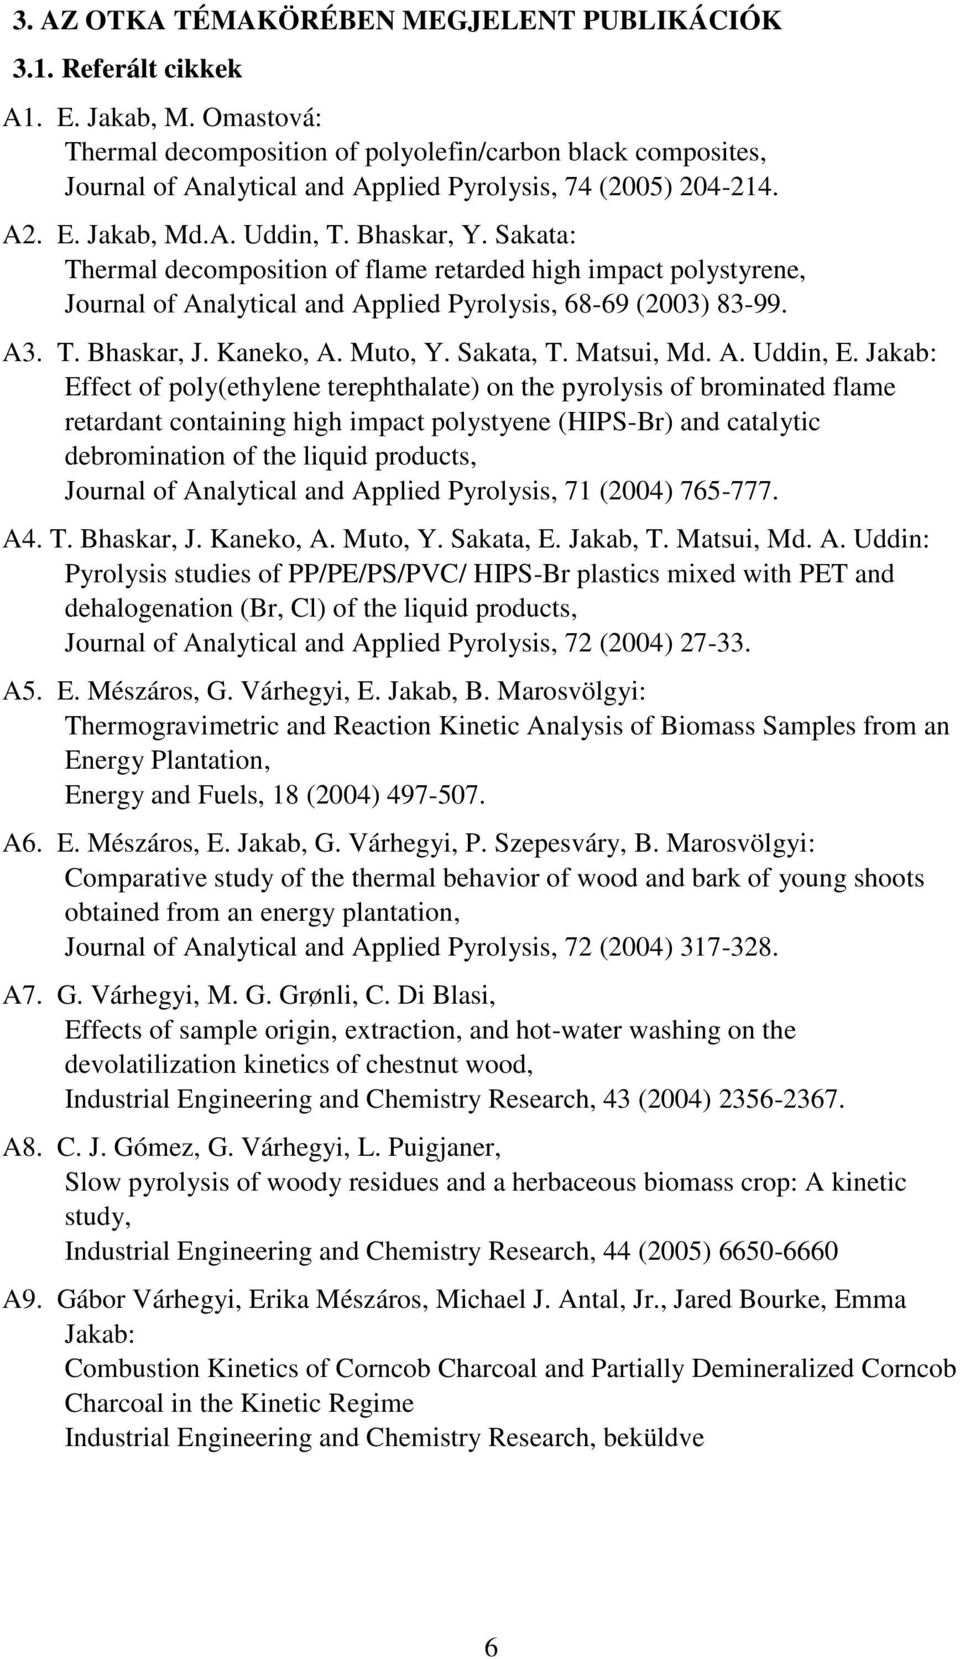 Sakata: Thermal decomposition of flame retarded high impact polystyrene, Journal of Analytical and Applied Pyrolysis, 68-69 (2003) 83-99. A3. T. Bhaskar, J. Kaneko, A. Muto, Y. Sakata, T. Matsui, Md.